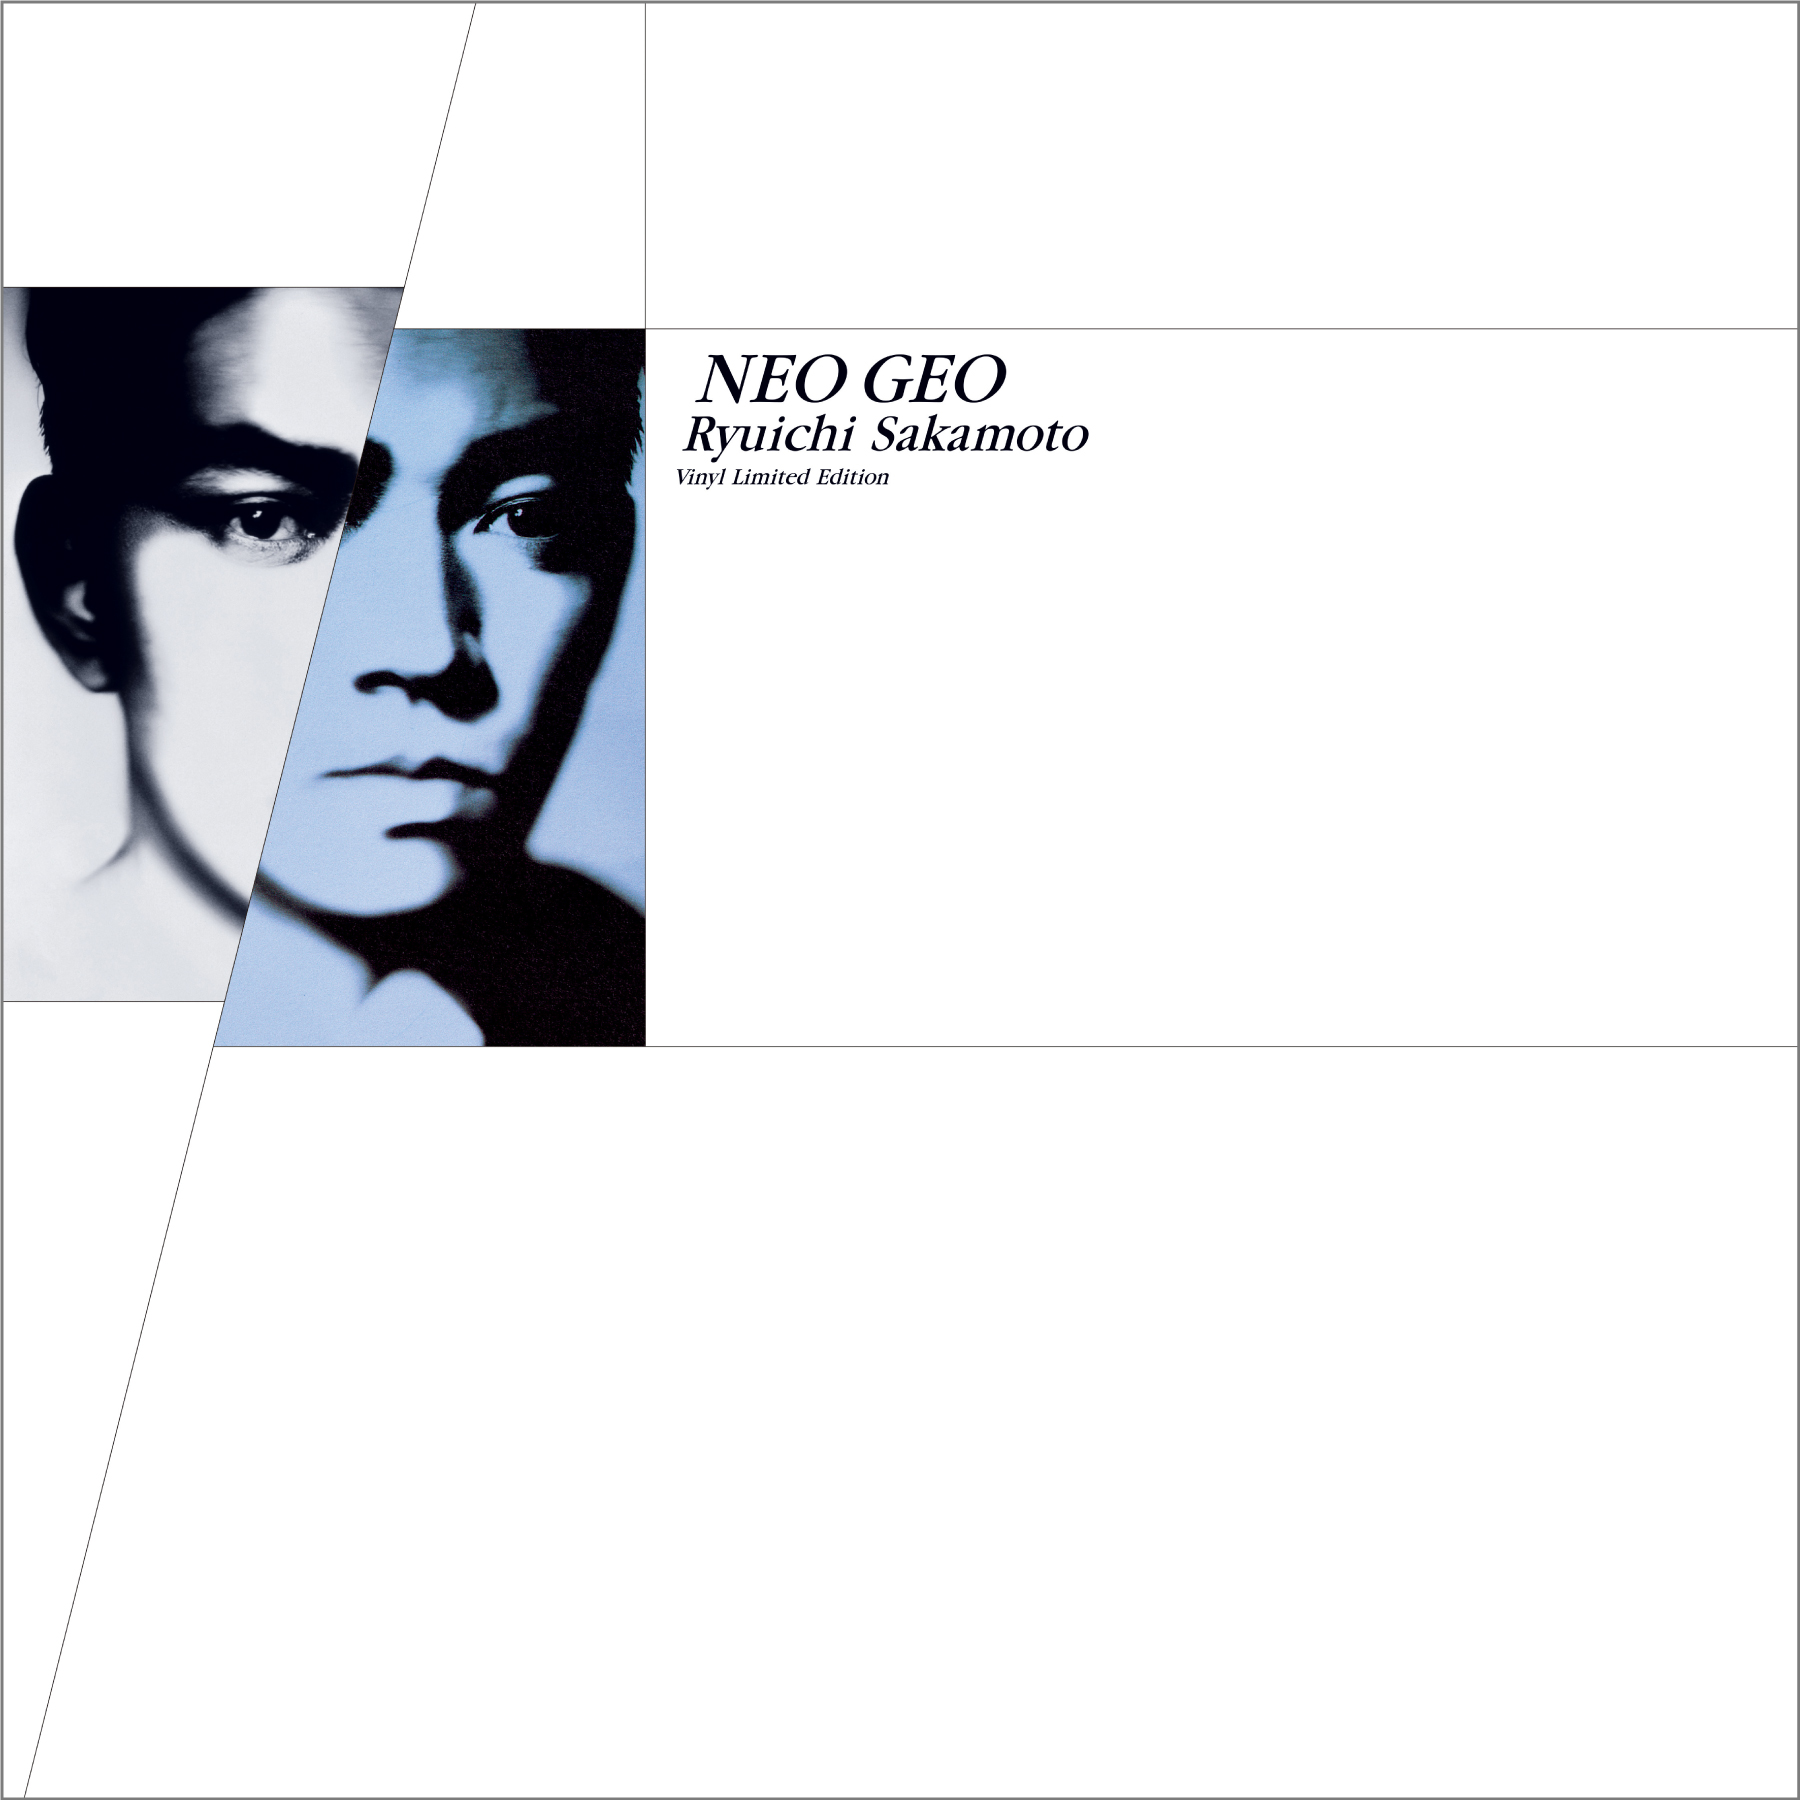 Neo Geo Box (LP Vinyl ) + Risky (12 inch) + Blu-ray x2 (Limited Edition)